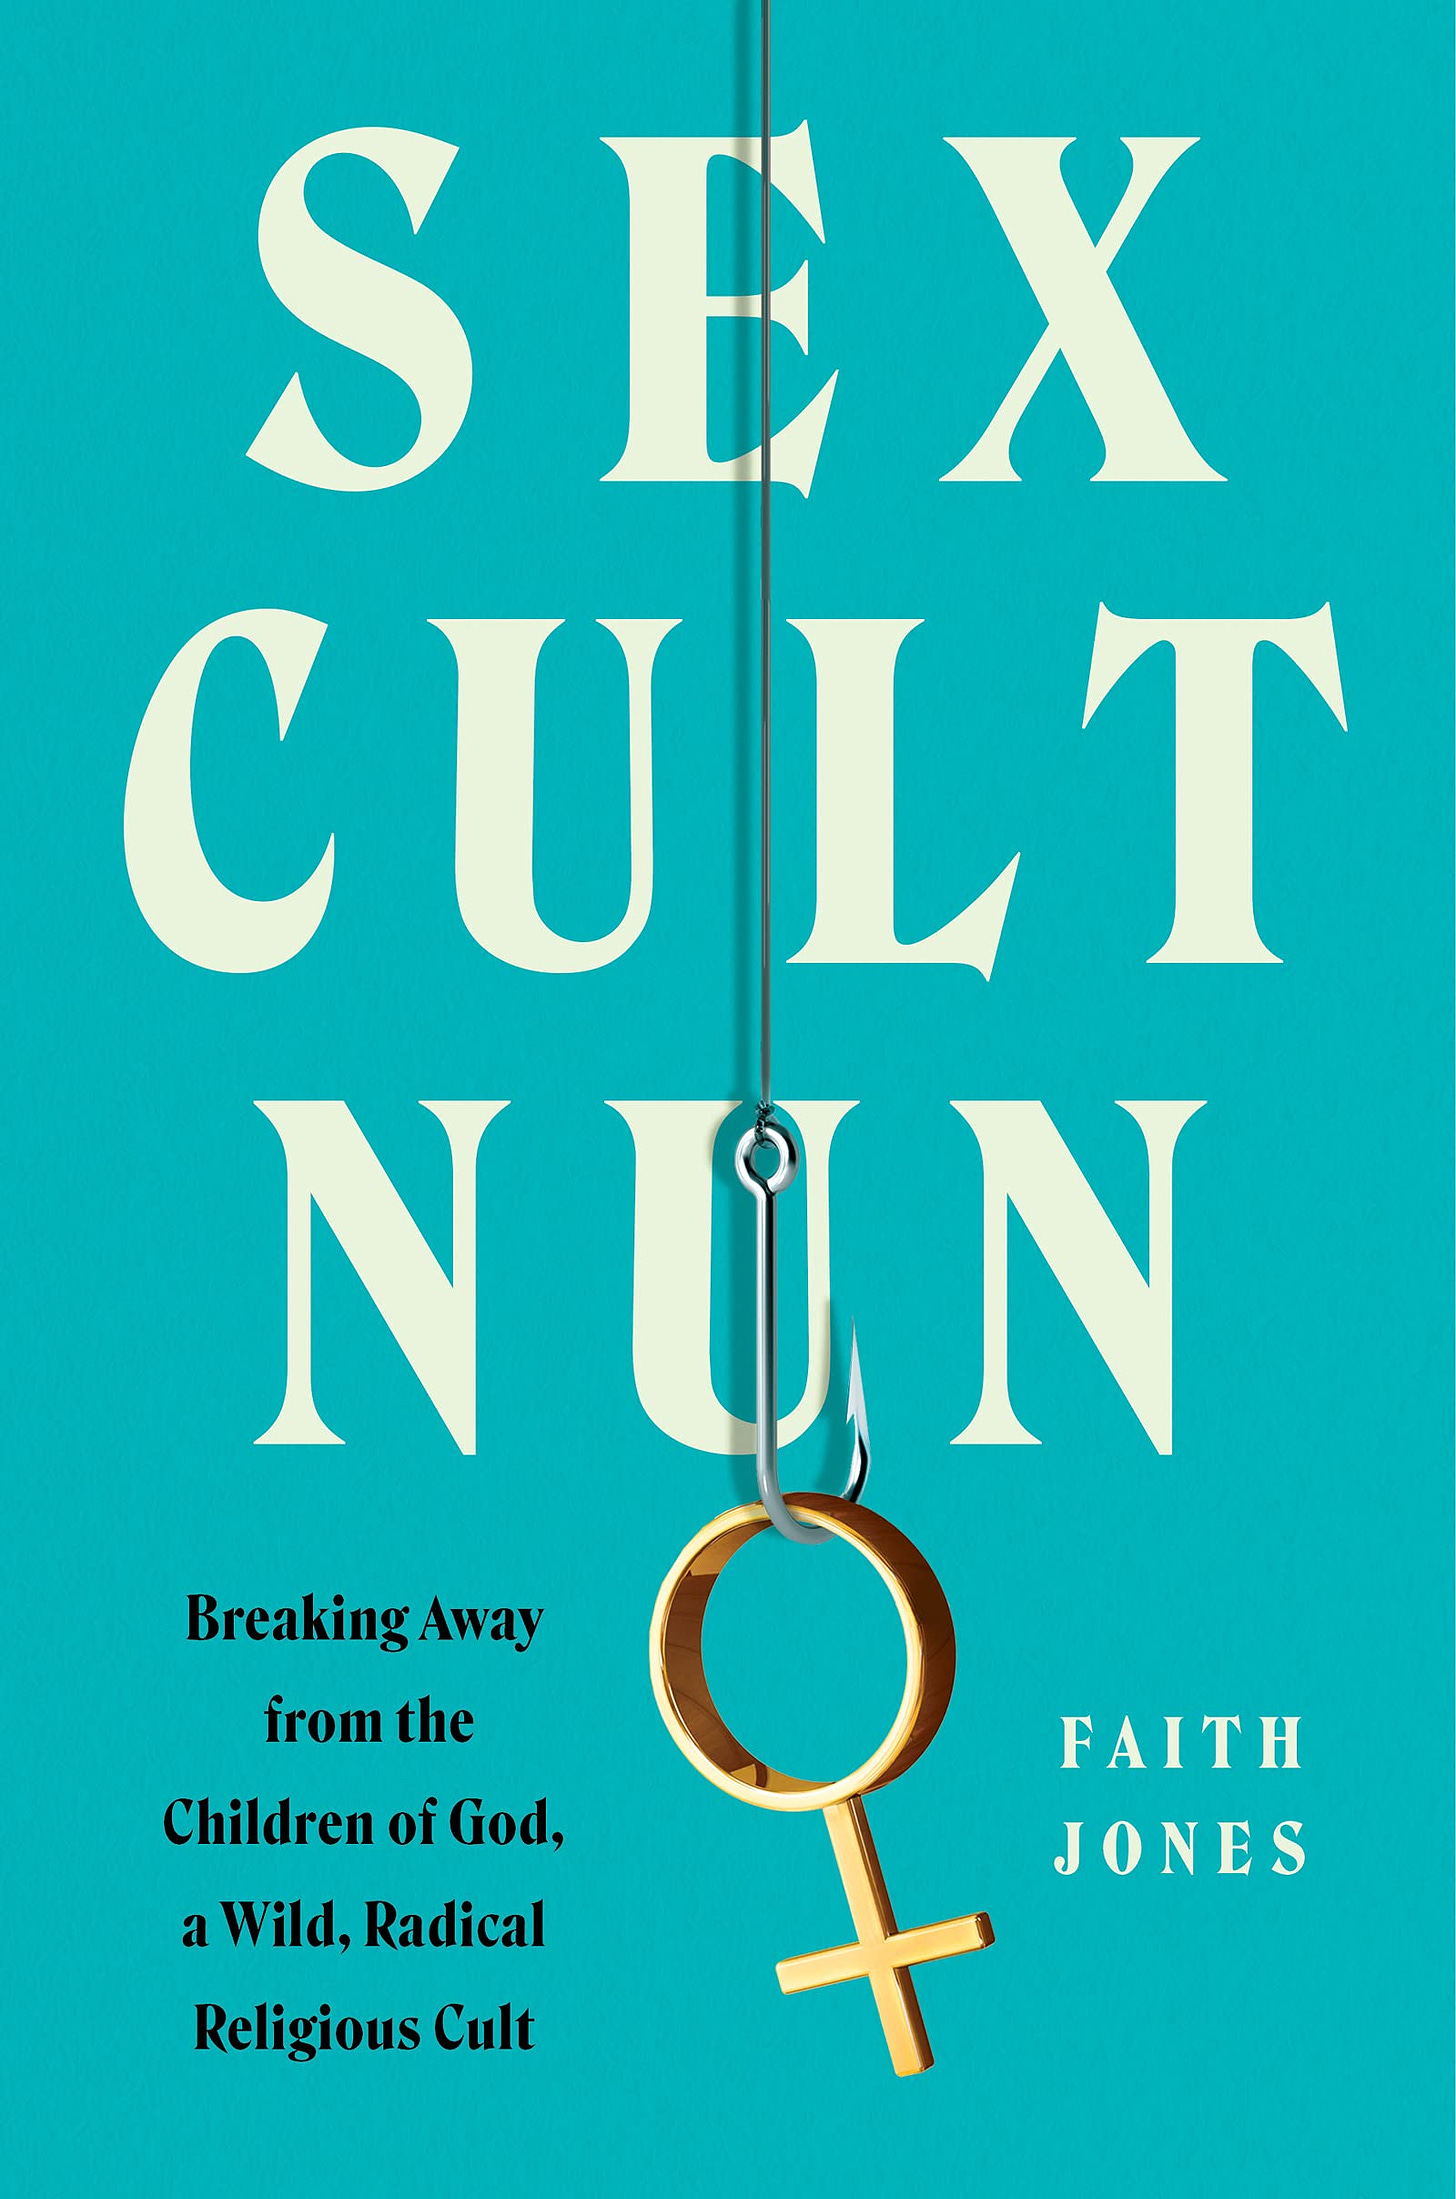 Amazon.com: Sex Cult Nun: Breaking Away from the Children of God, a Wild,  Radical Religious Cult: 9780062952455: Jones, Faith: Books